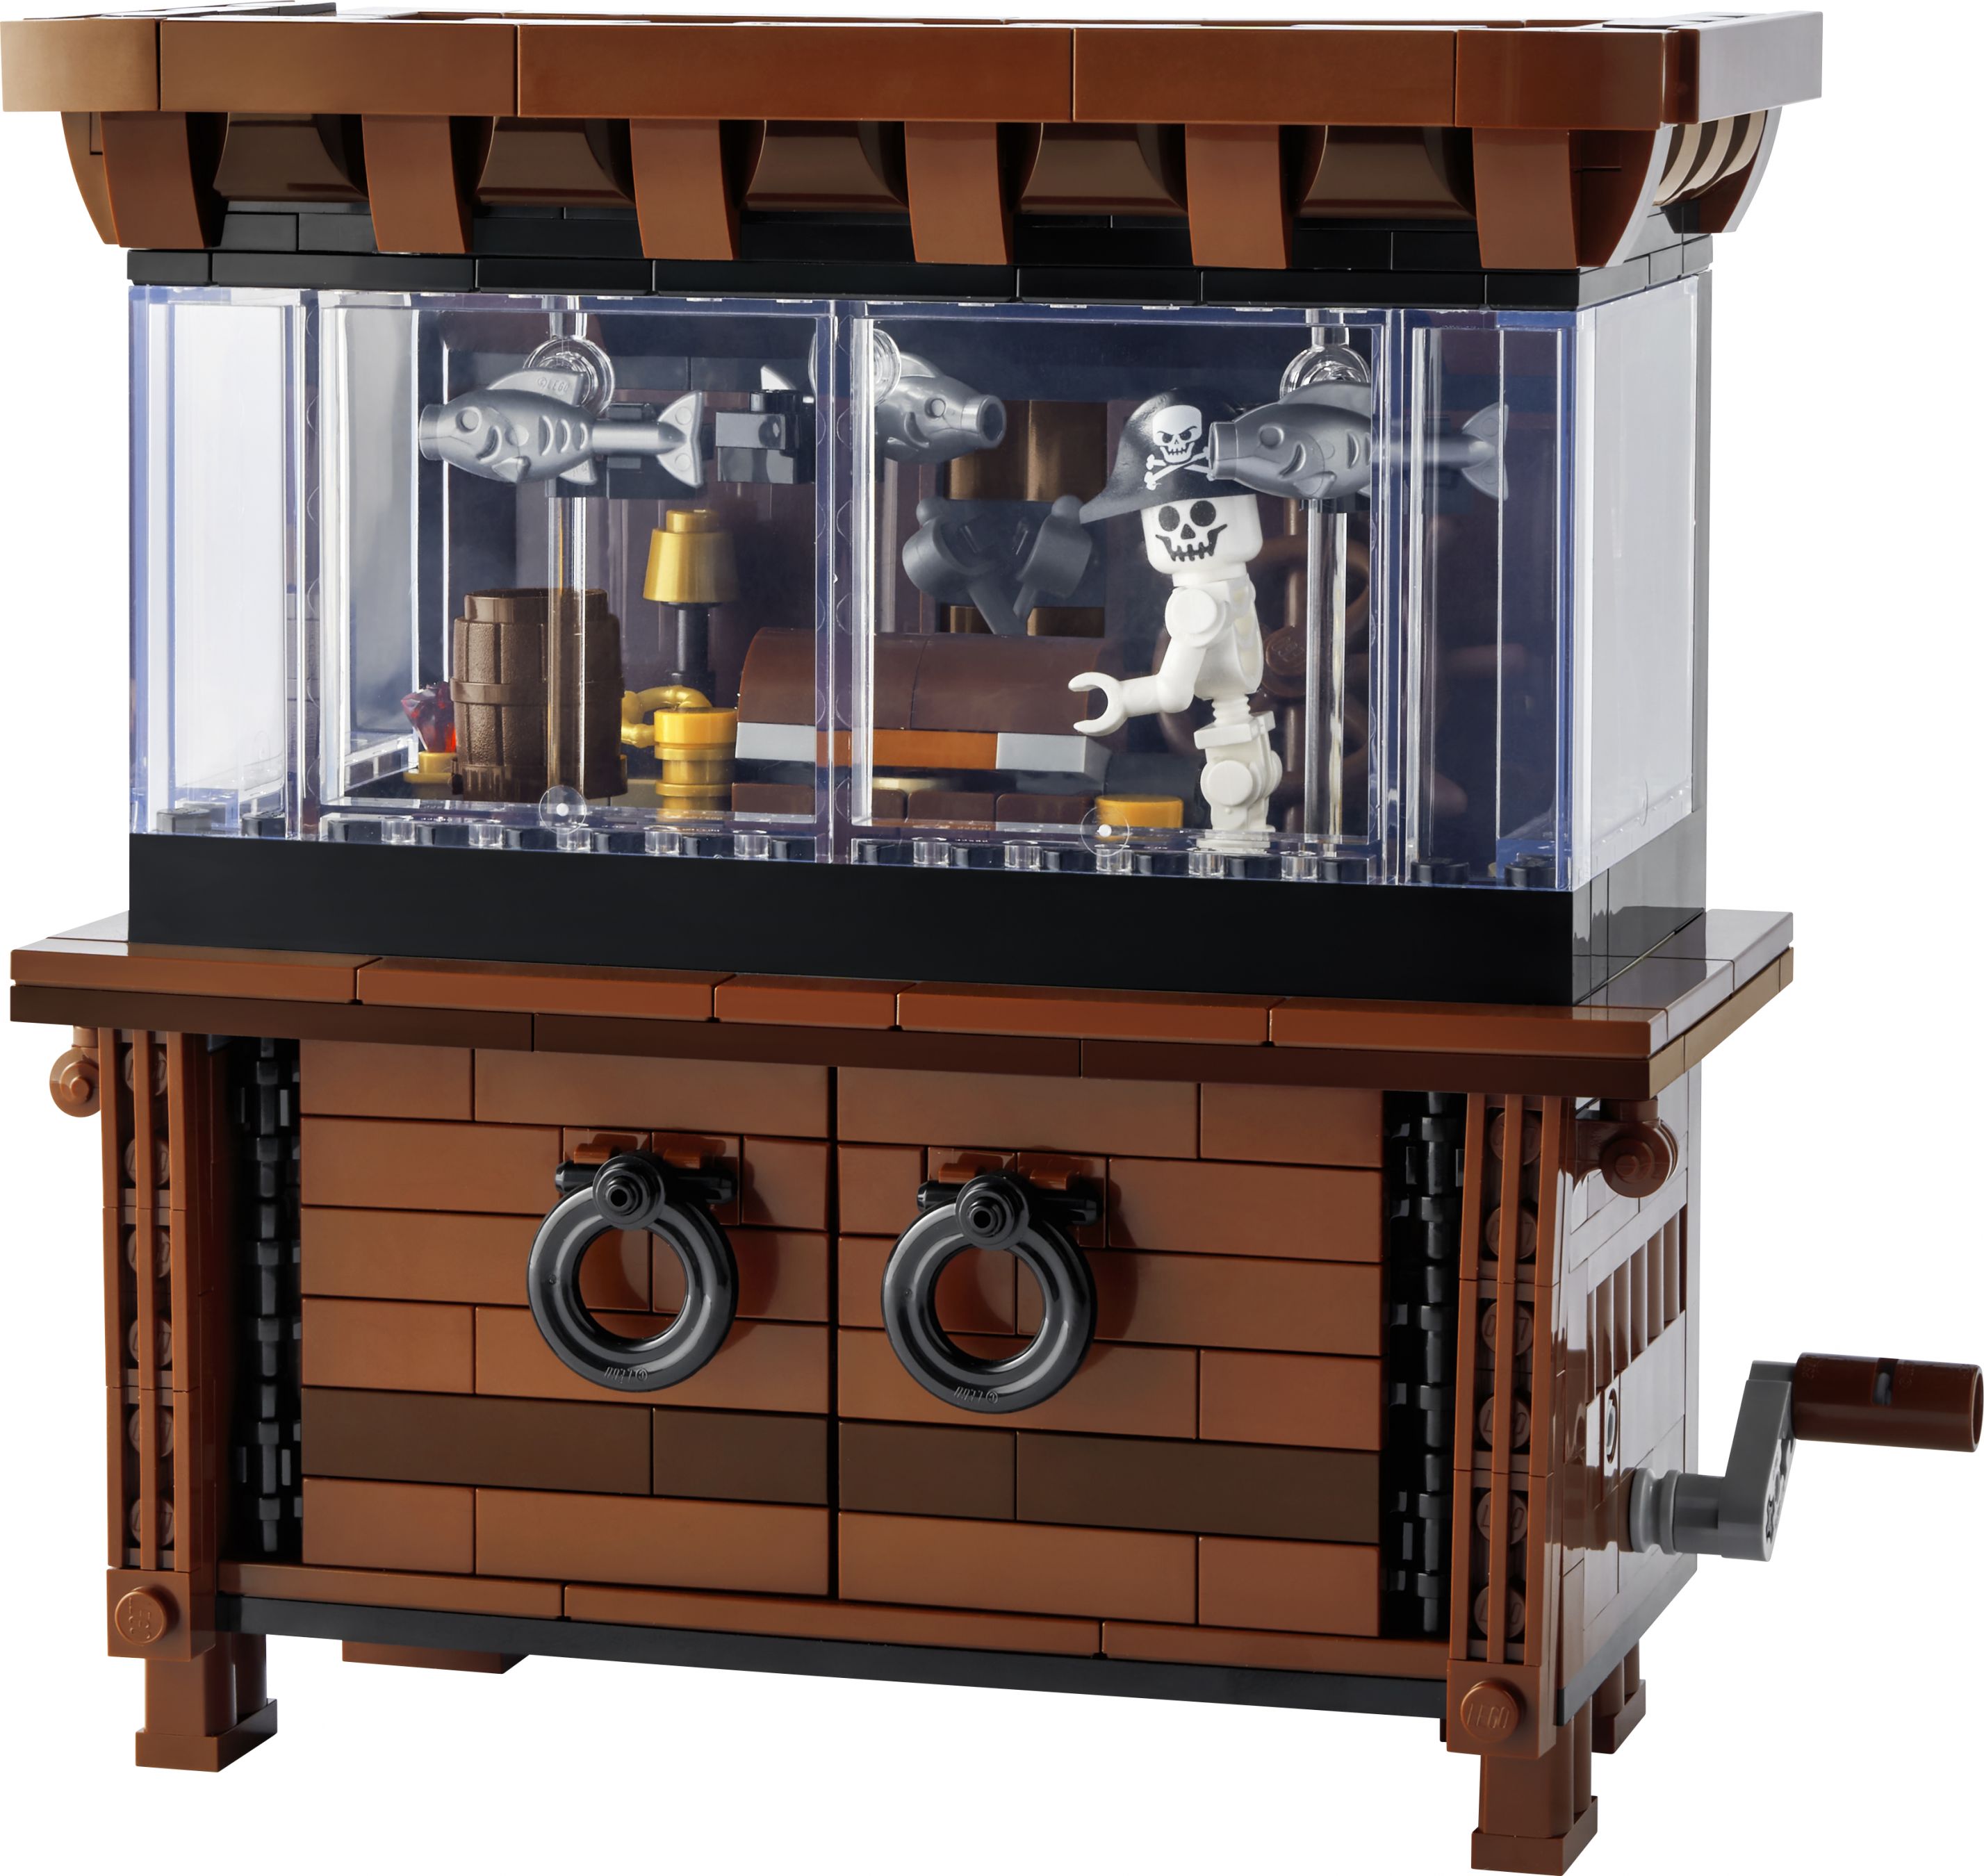 LEGO Bricklink 910015 Clockwork Aquarium! LEGO_910015_front_03.jpg